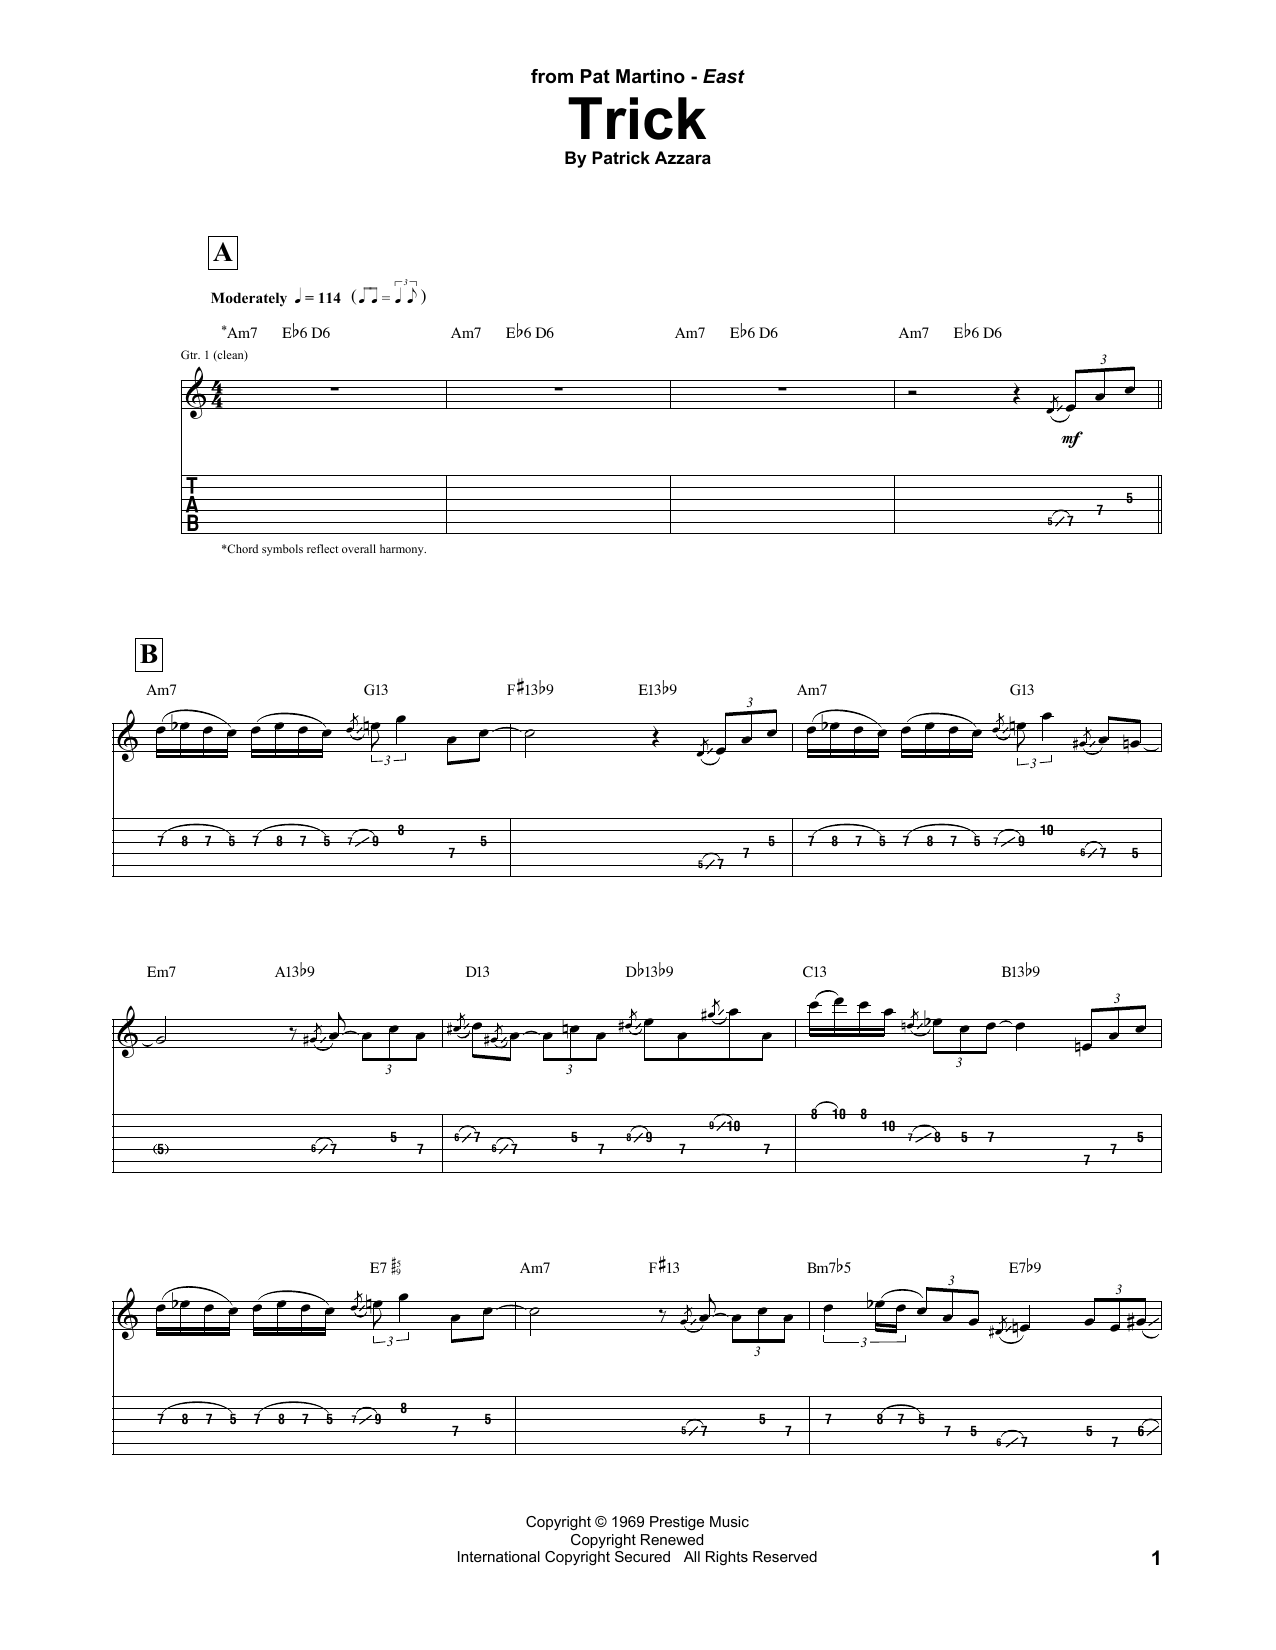 Pat Martino Trick Sheet Music Notes & Chords for Guitar Tab - Download or Print PDF